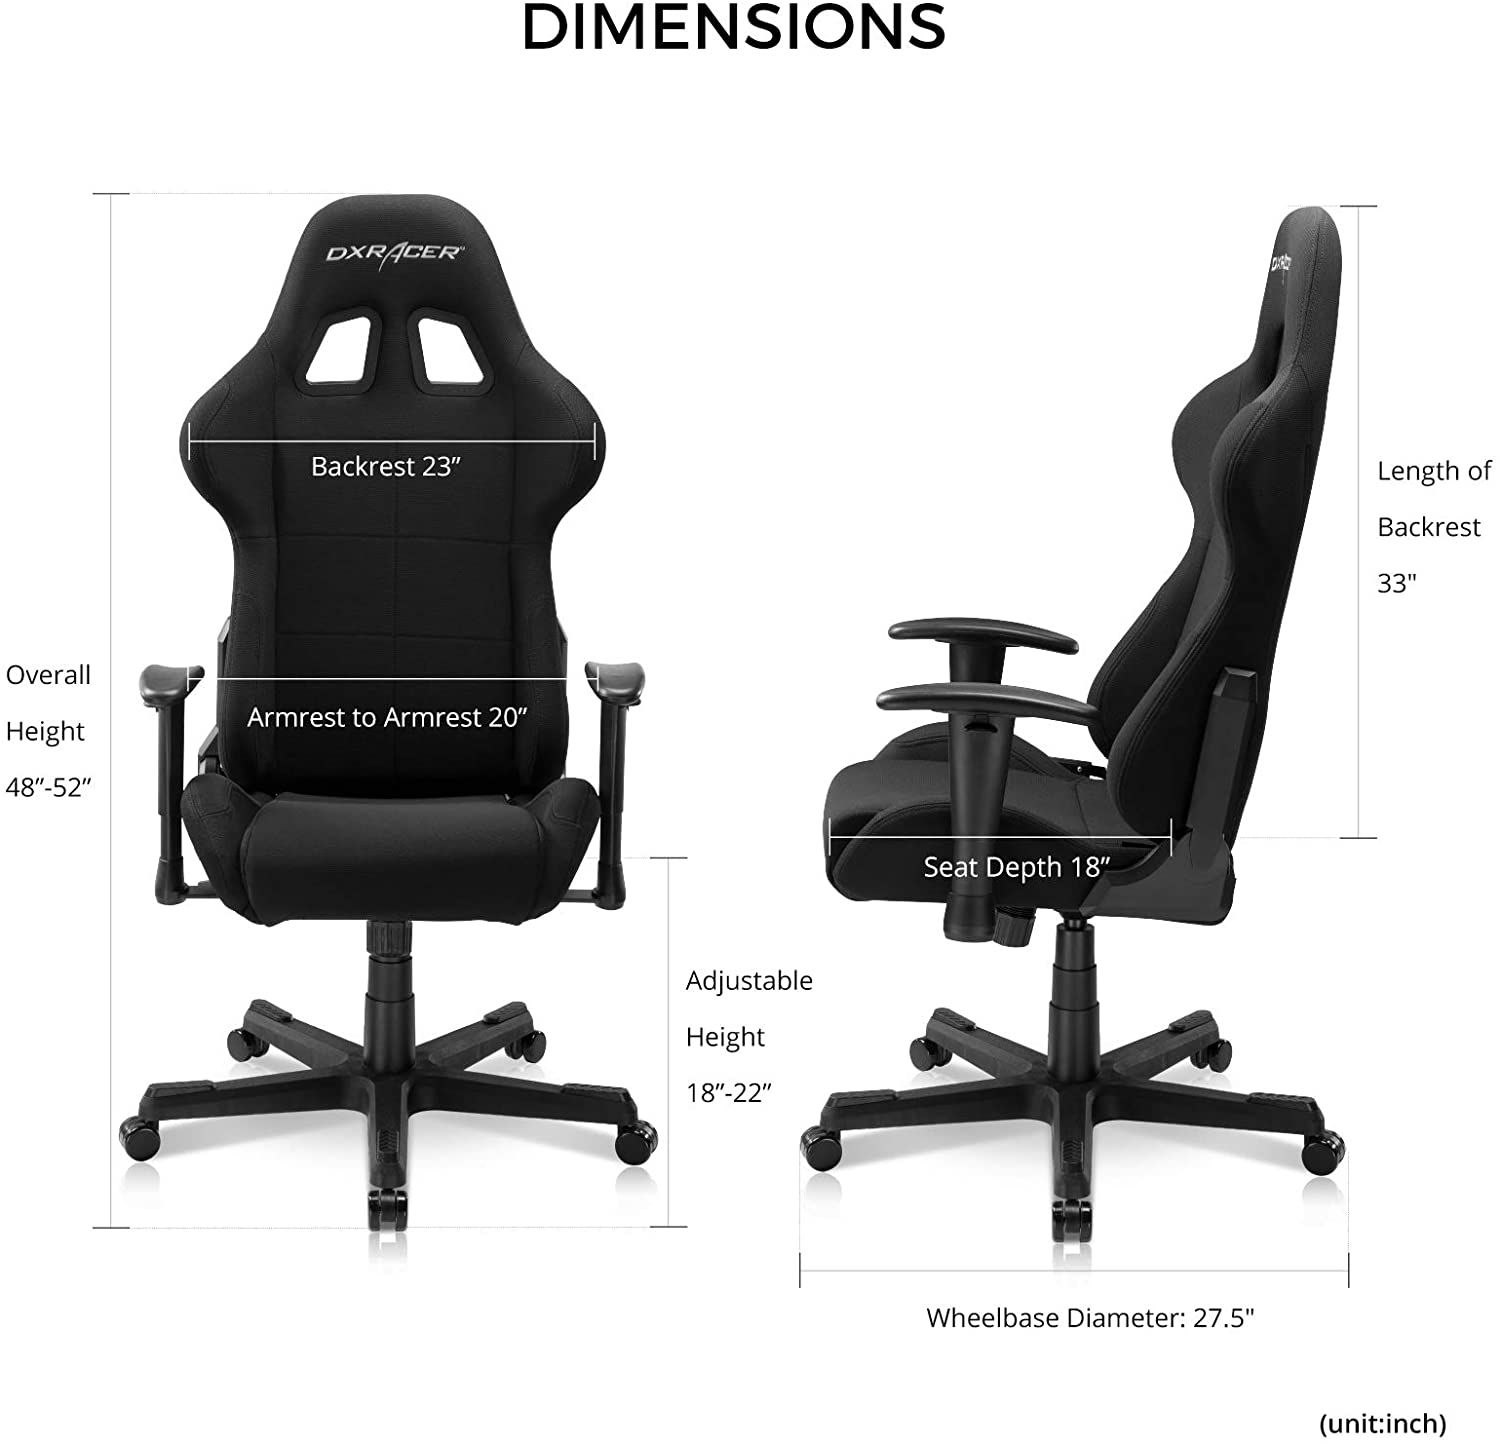 DXRacer FD01 Gaming Chair dimensions